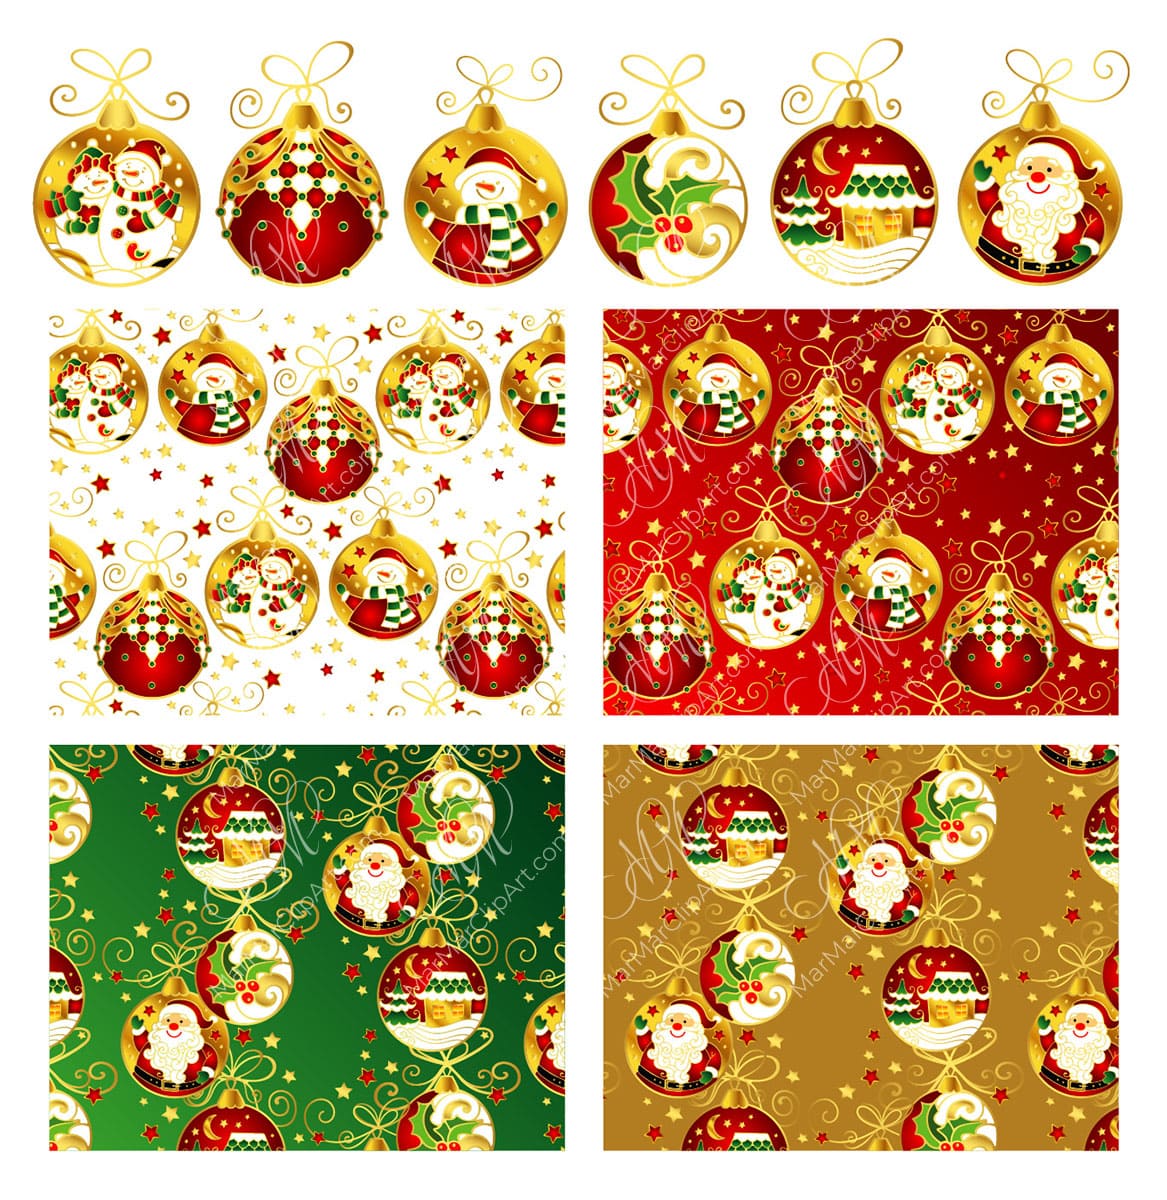 Christmas set of balls and seamless patterns